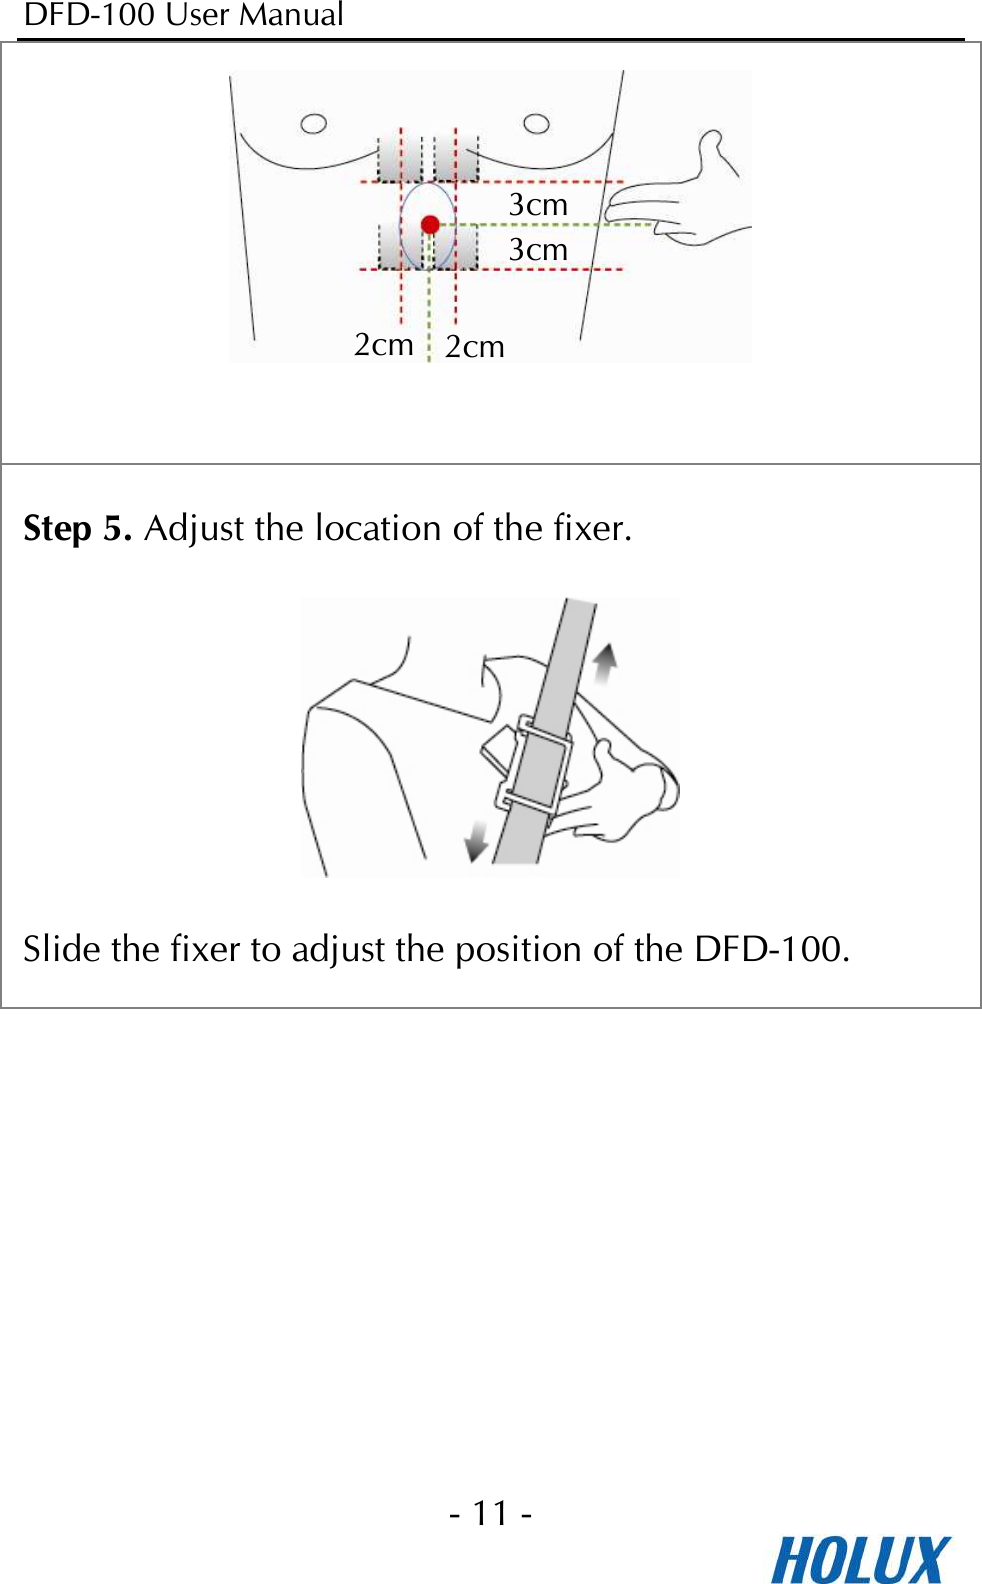 DFD-100 User Manual - 11 -    Step 5. Adjust the location of the fixer.  Slide the fixer to adjust the position of the DFD-100. 3cm 3cm 2cm 2cm 